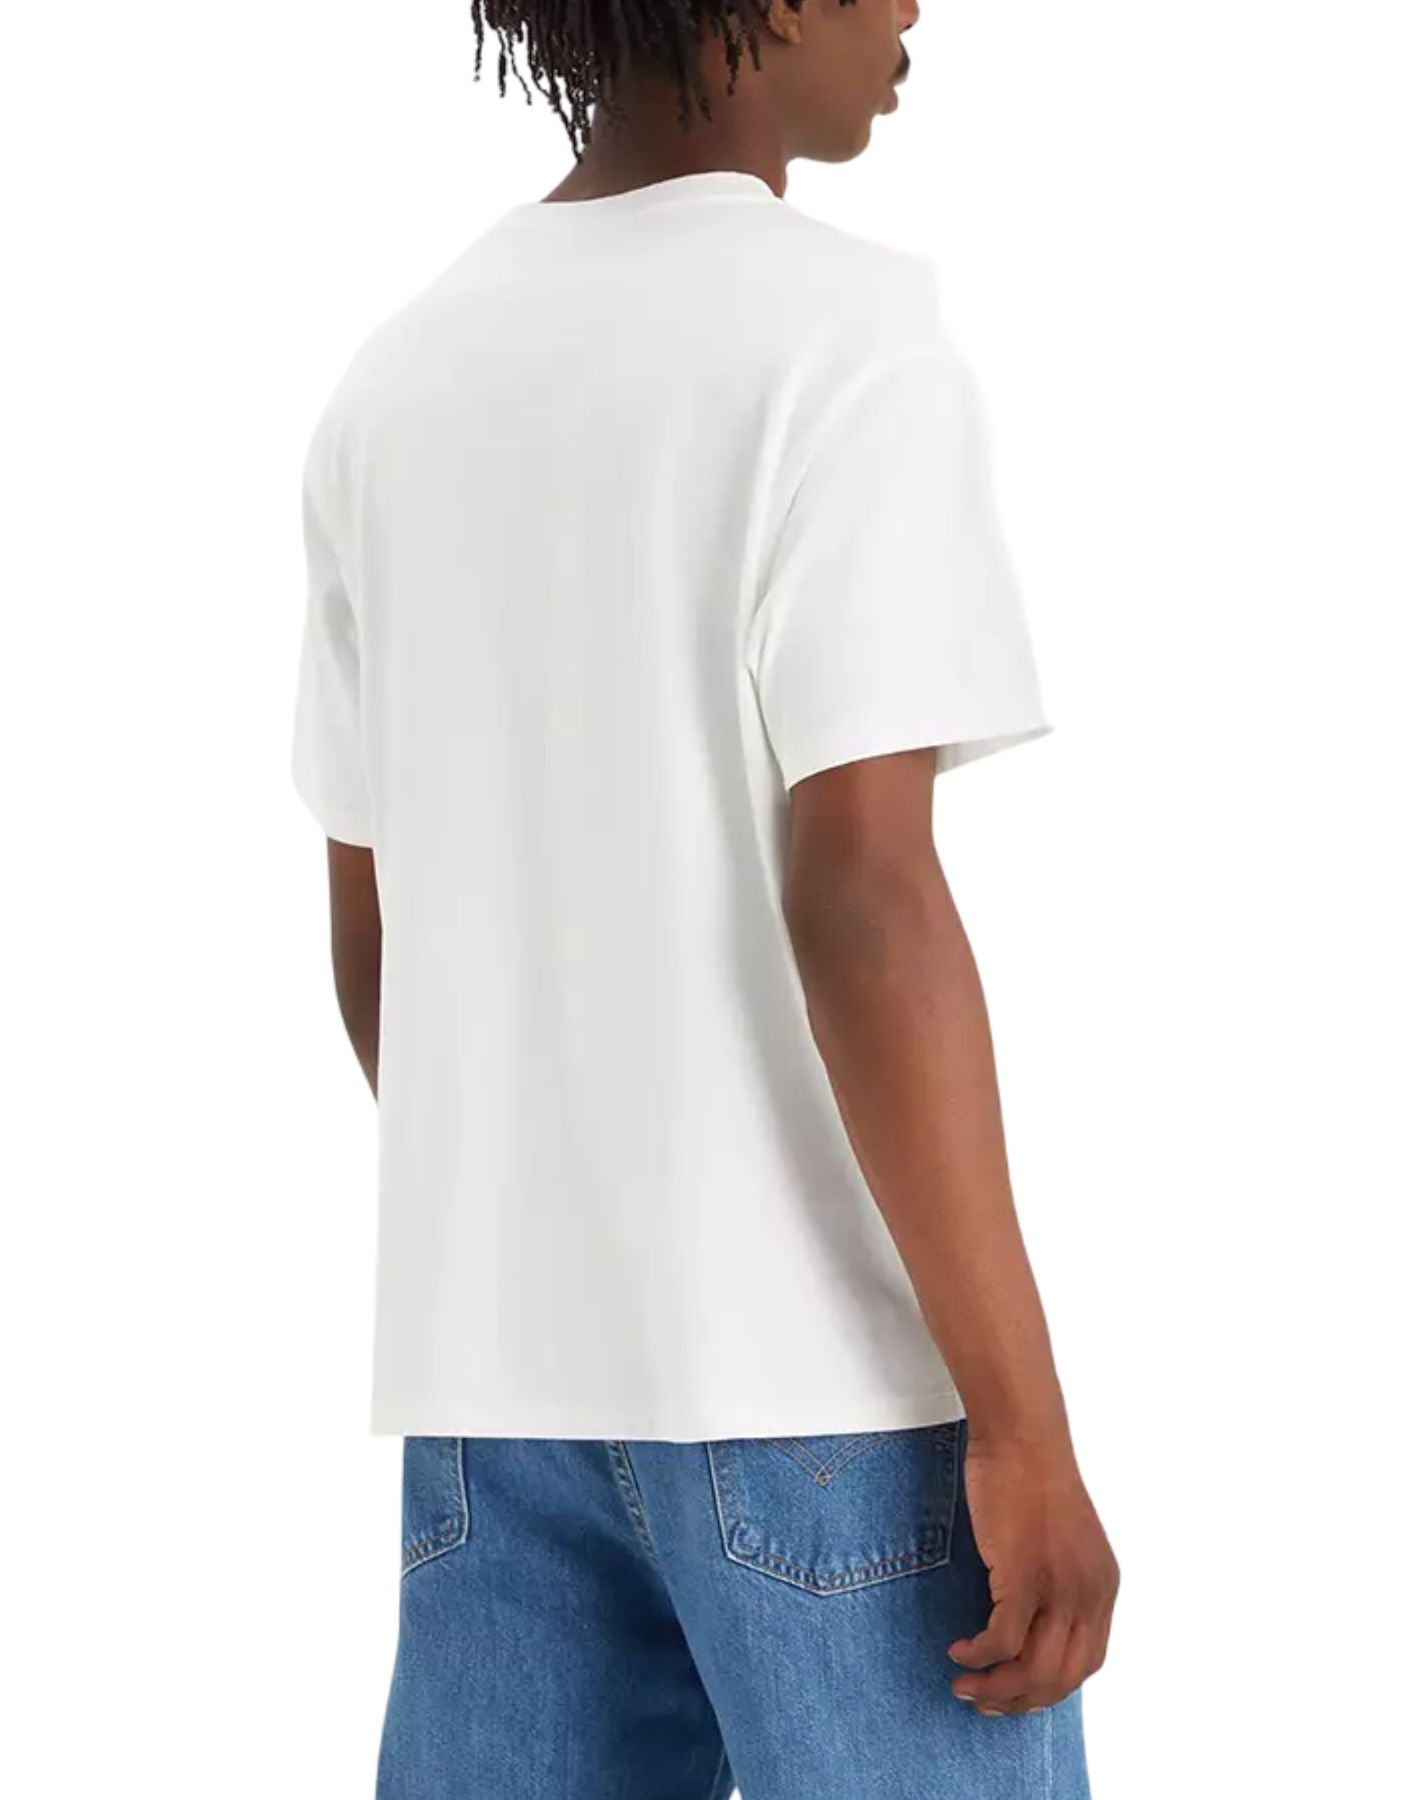 T-shirt for man 87373 0105 white Levi's